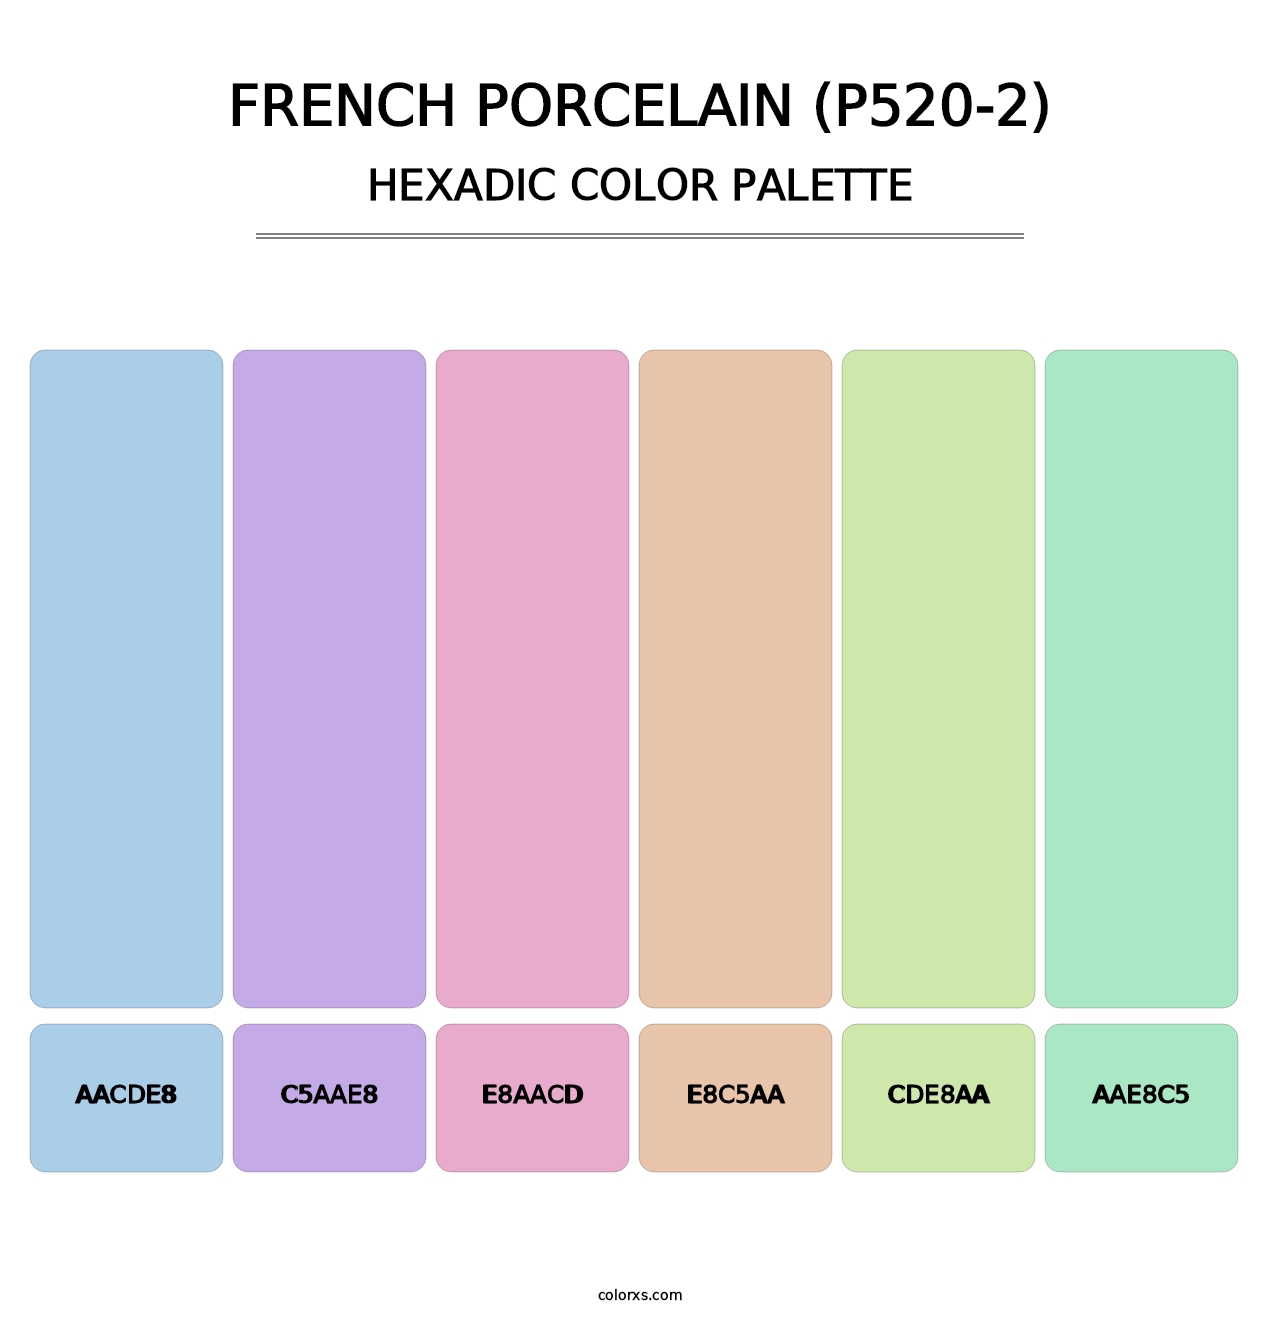 French Porcelain (P520-2) - Hexadic Color Palette